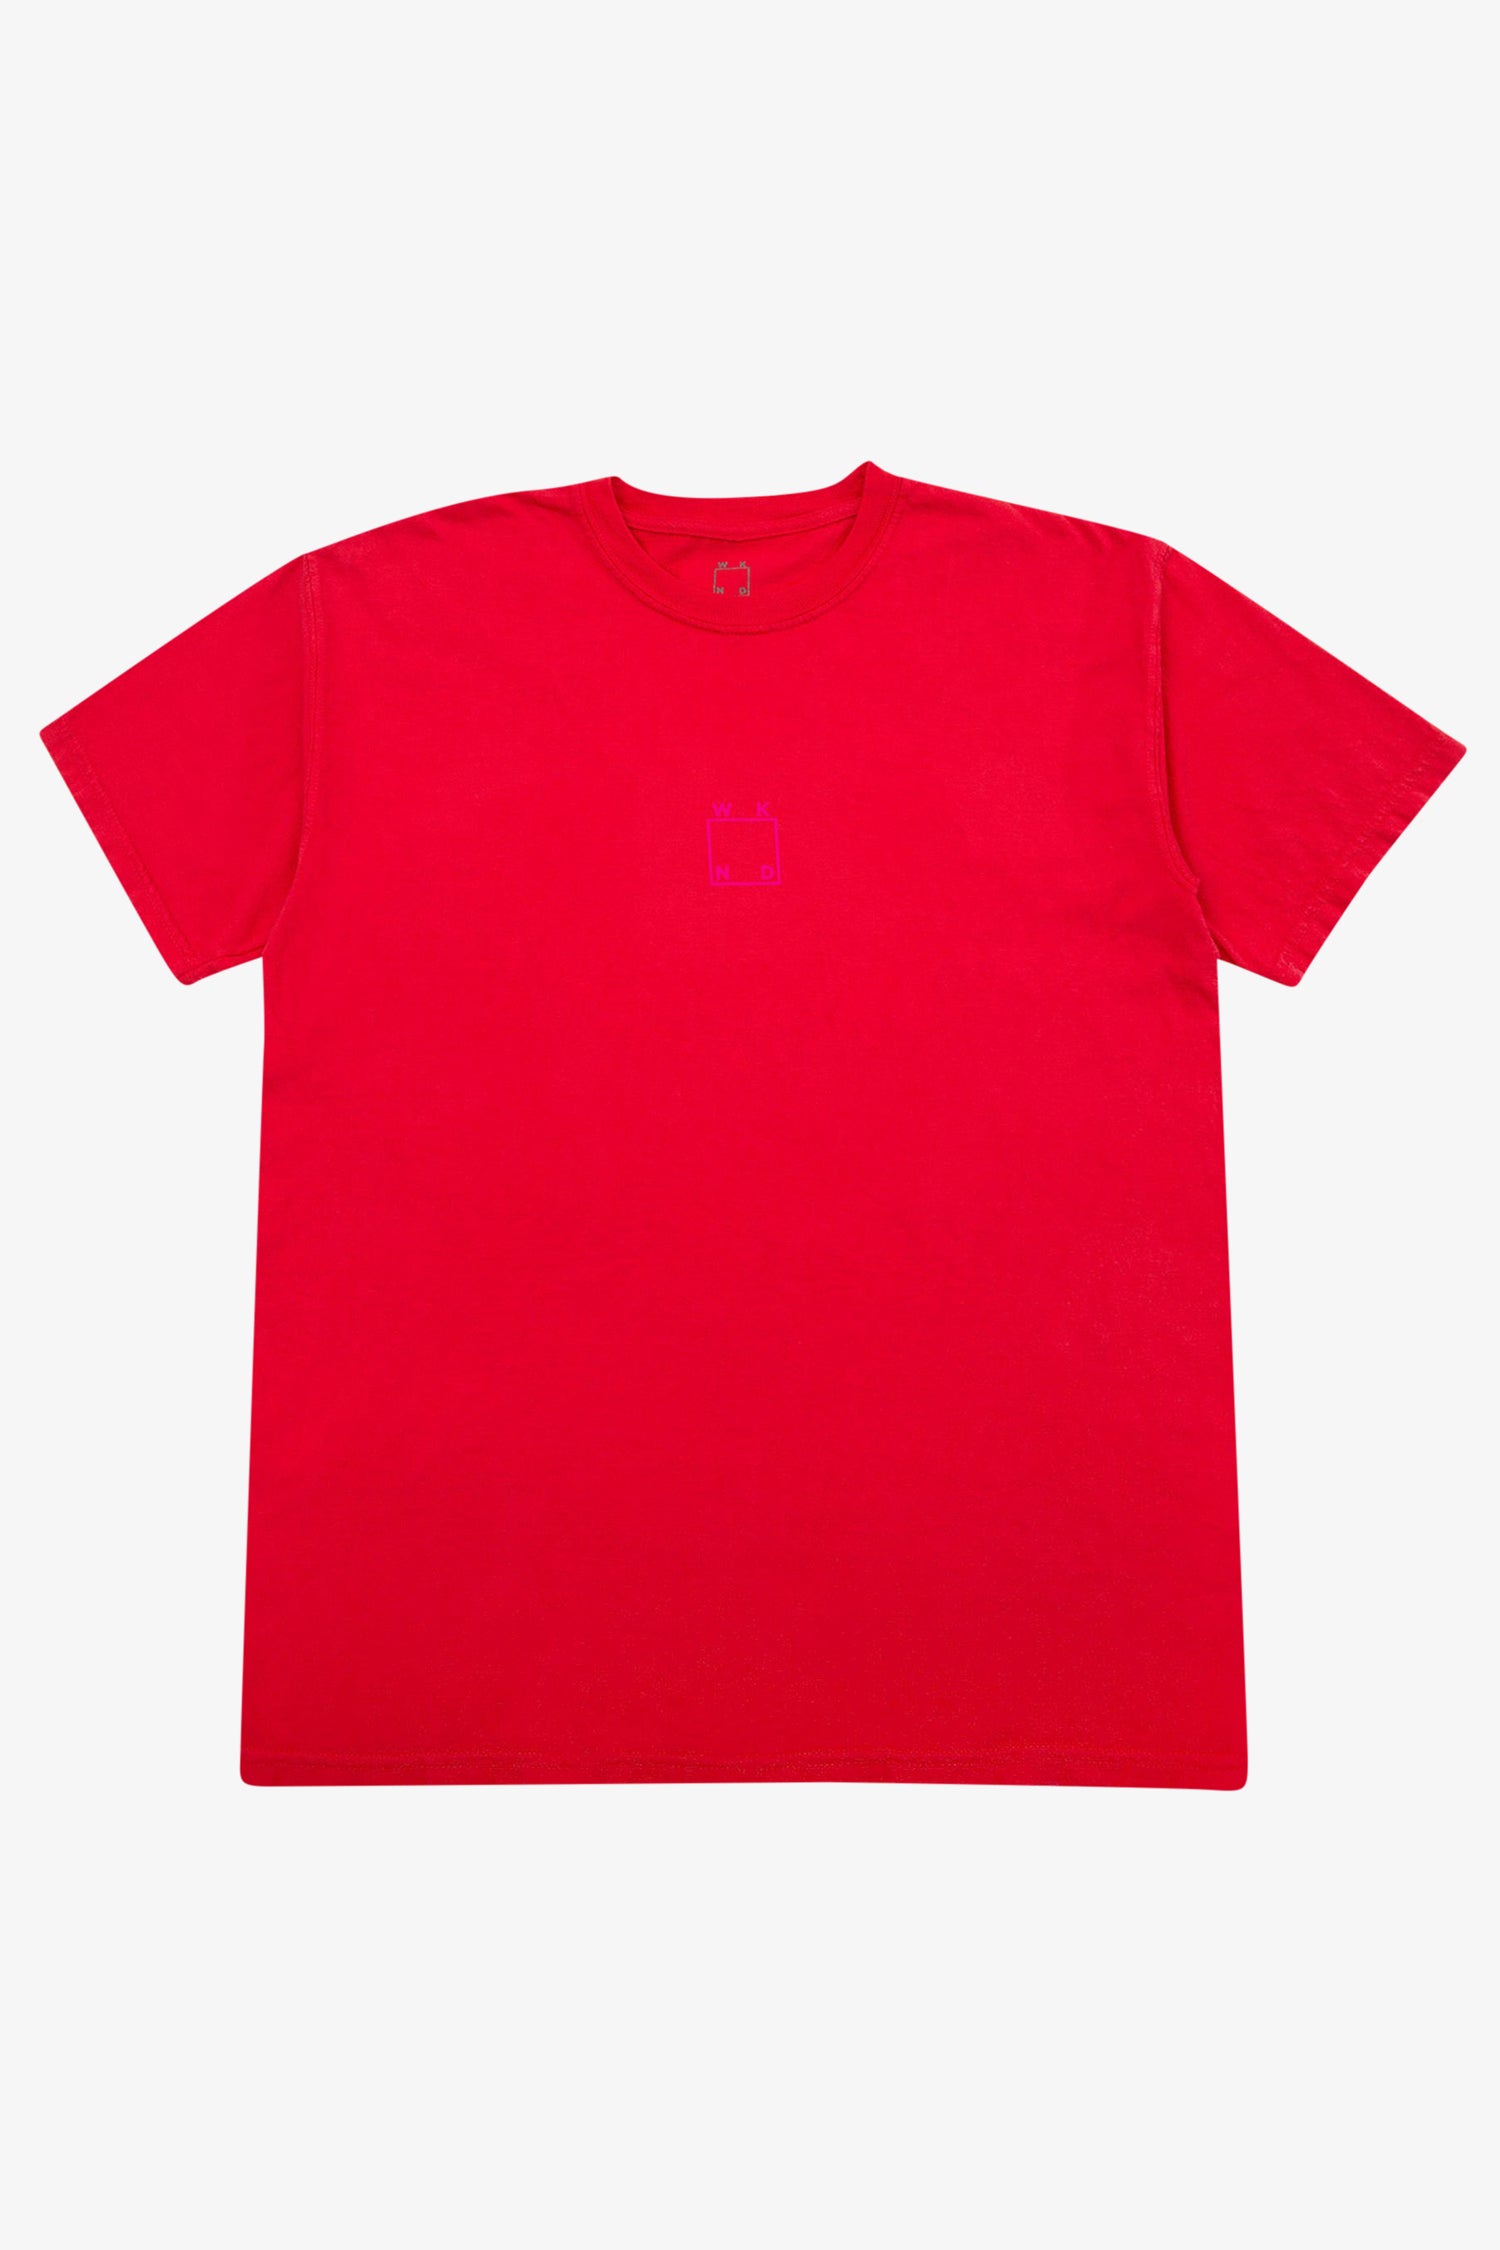 Selectshop FRAME - WKND Logo Tee-Pigment Dye T-Shirt Dubai